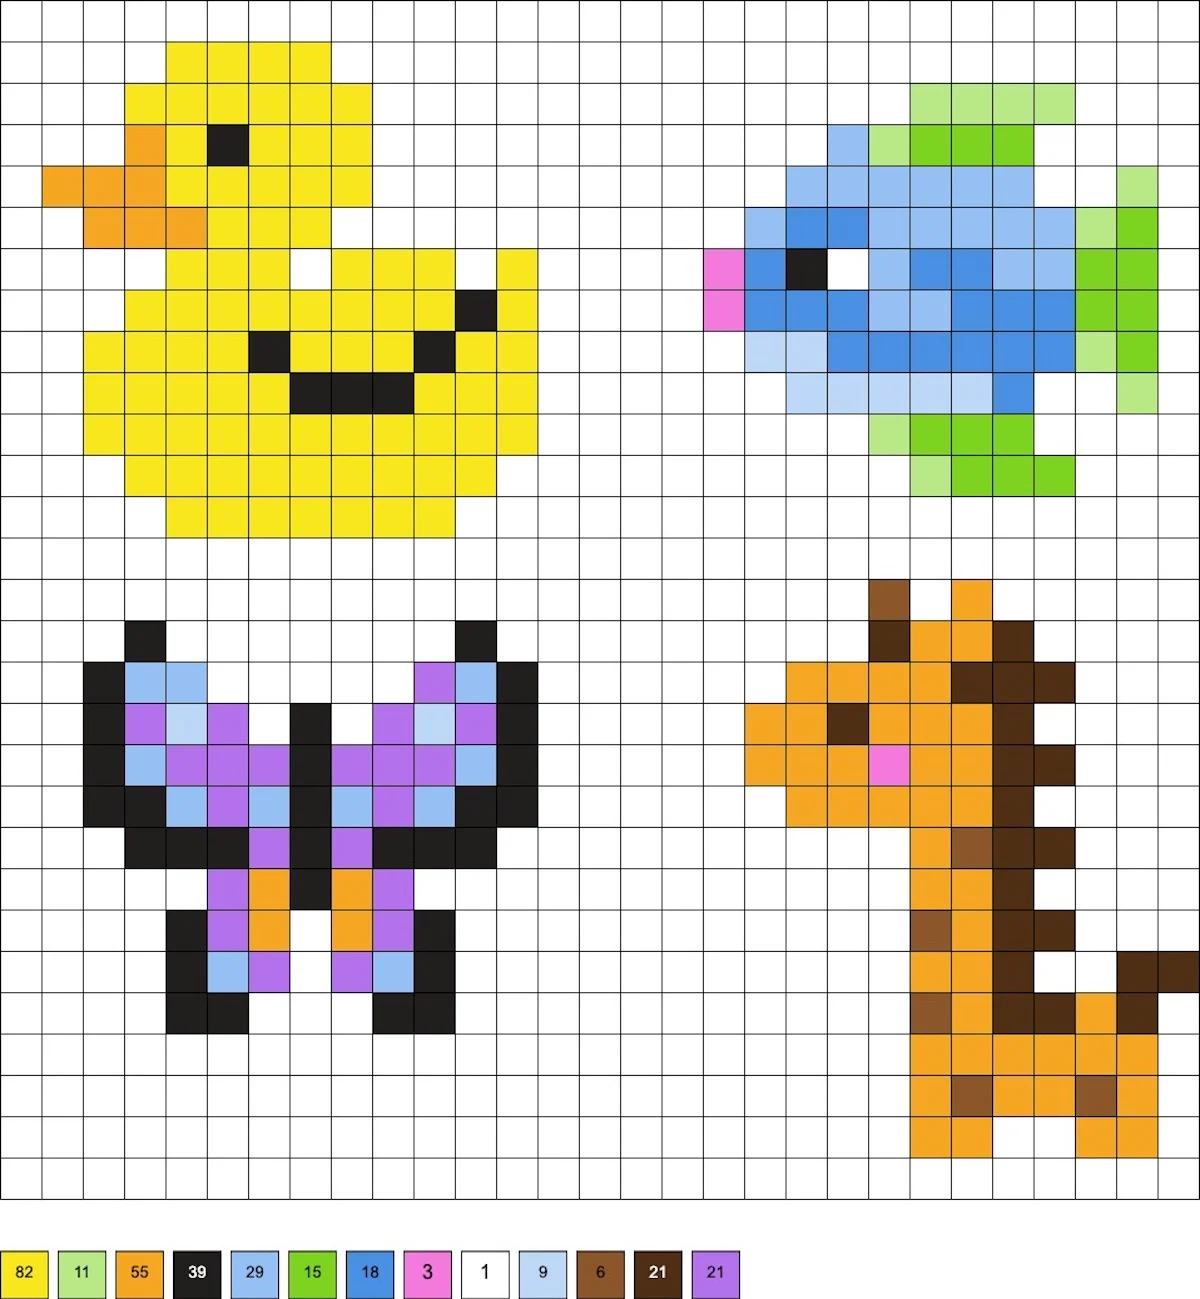 duck, fish, butterfly, and giraffe hama patterns